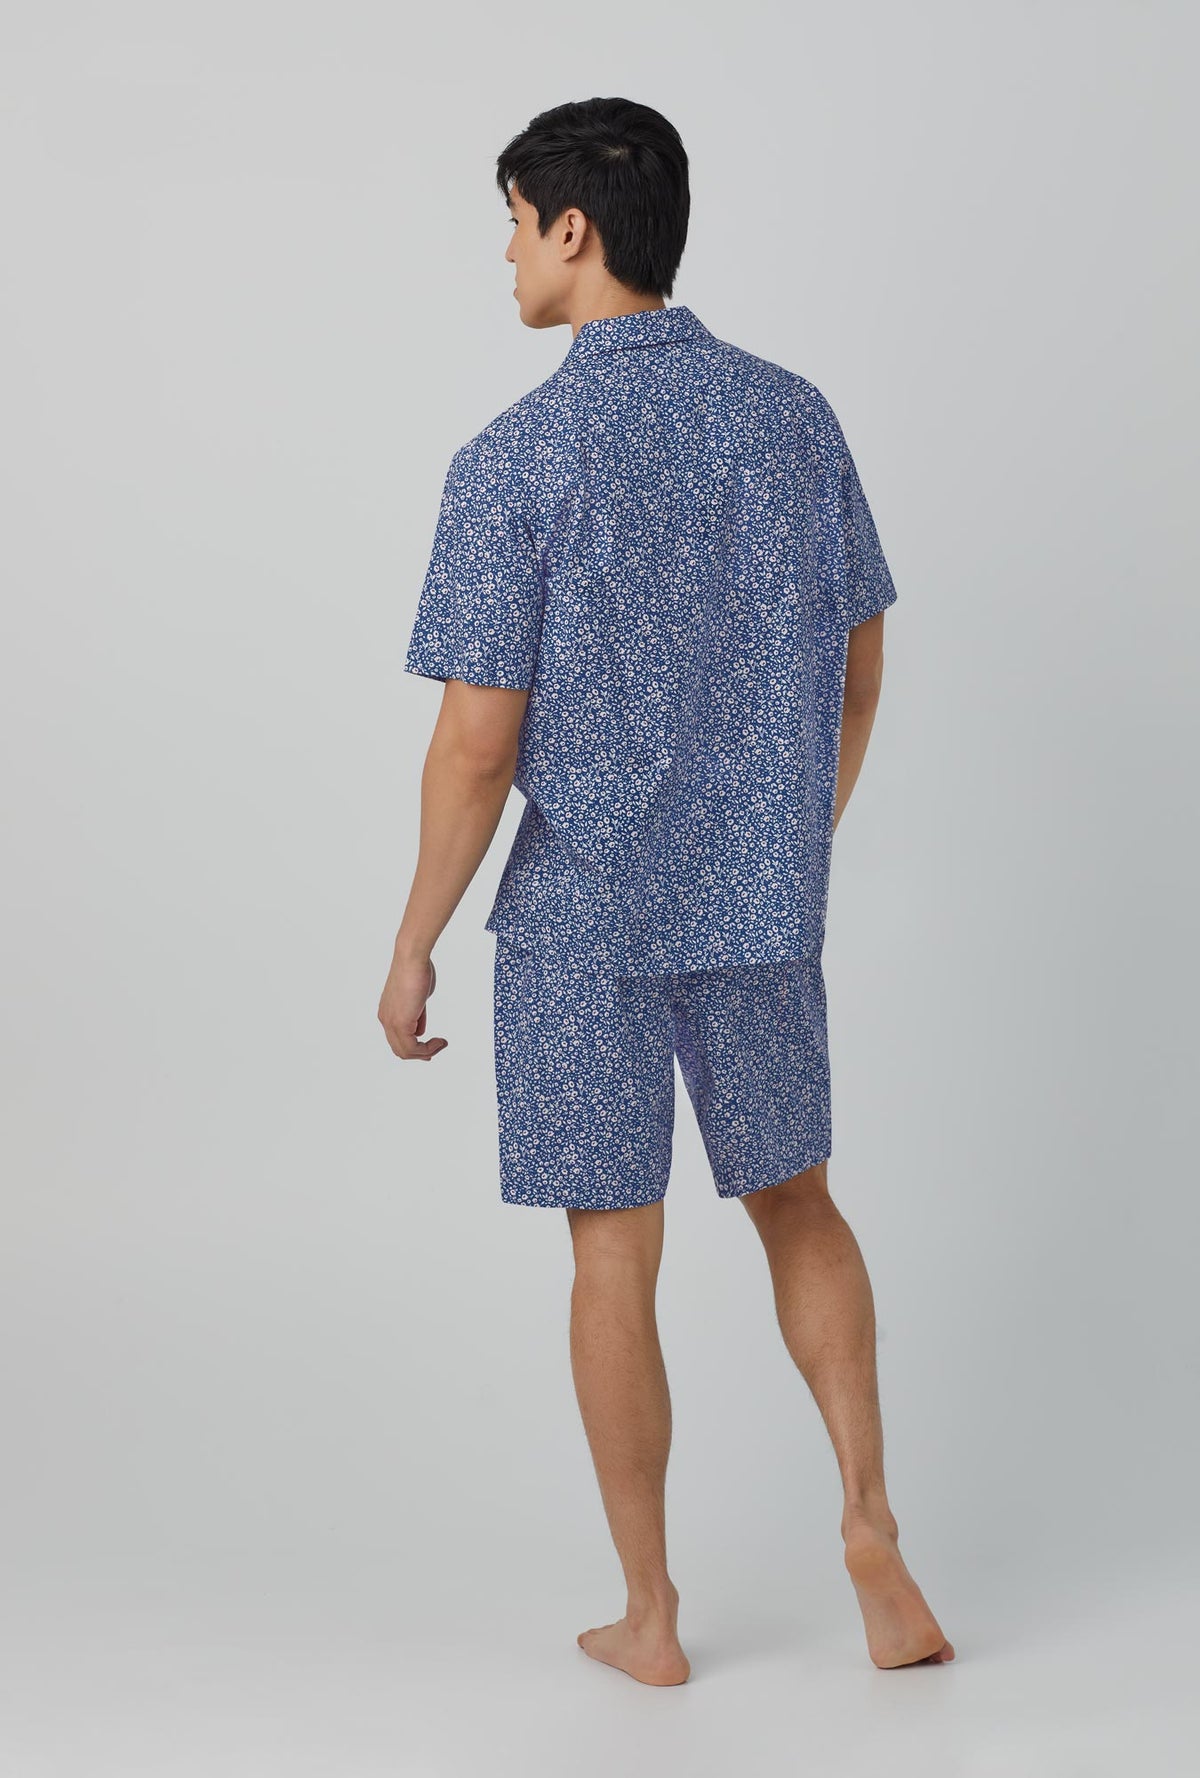 A men wearing blue Short Sleeve Notch Woven Cotton Poplin Boxer PJ Set with Sprout print